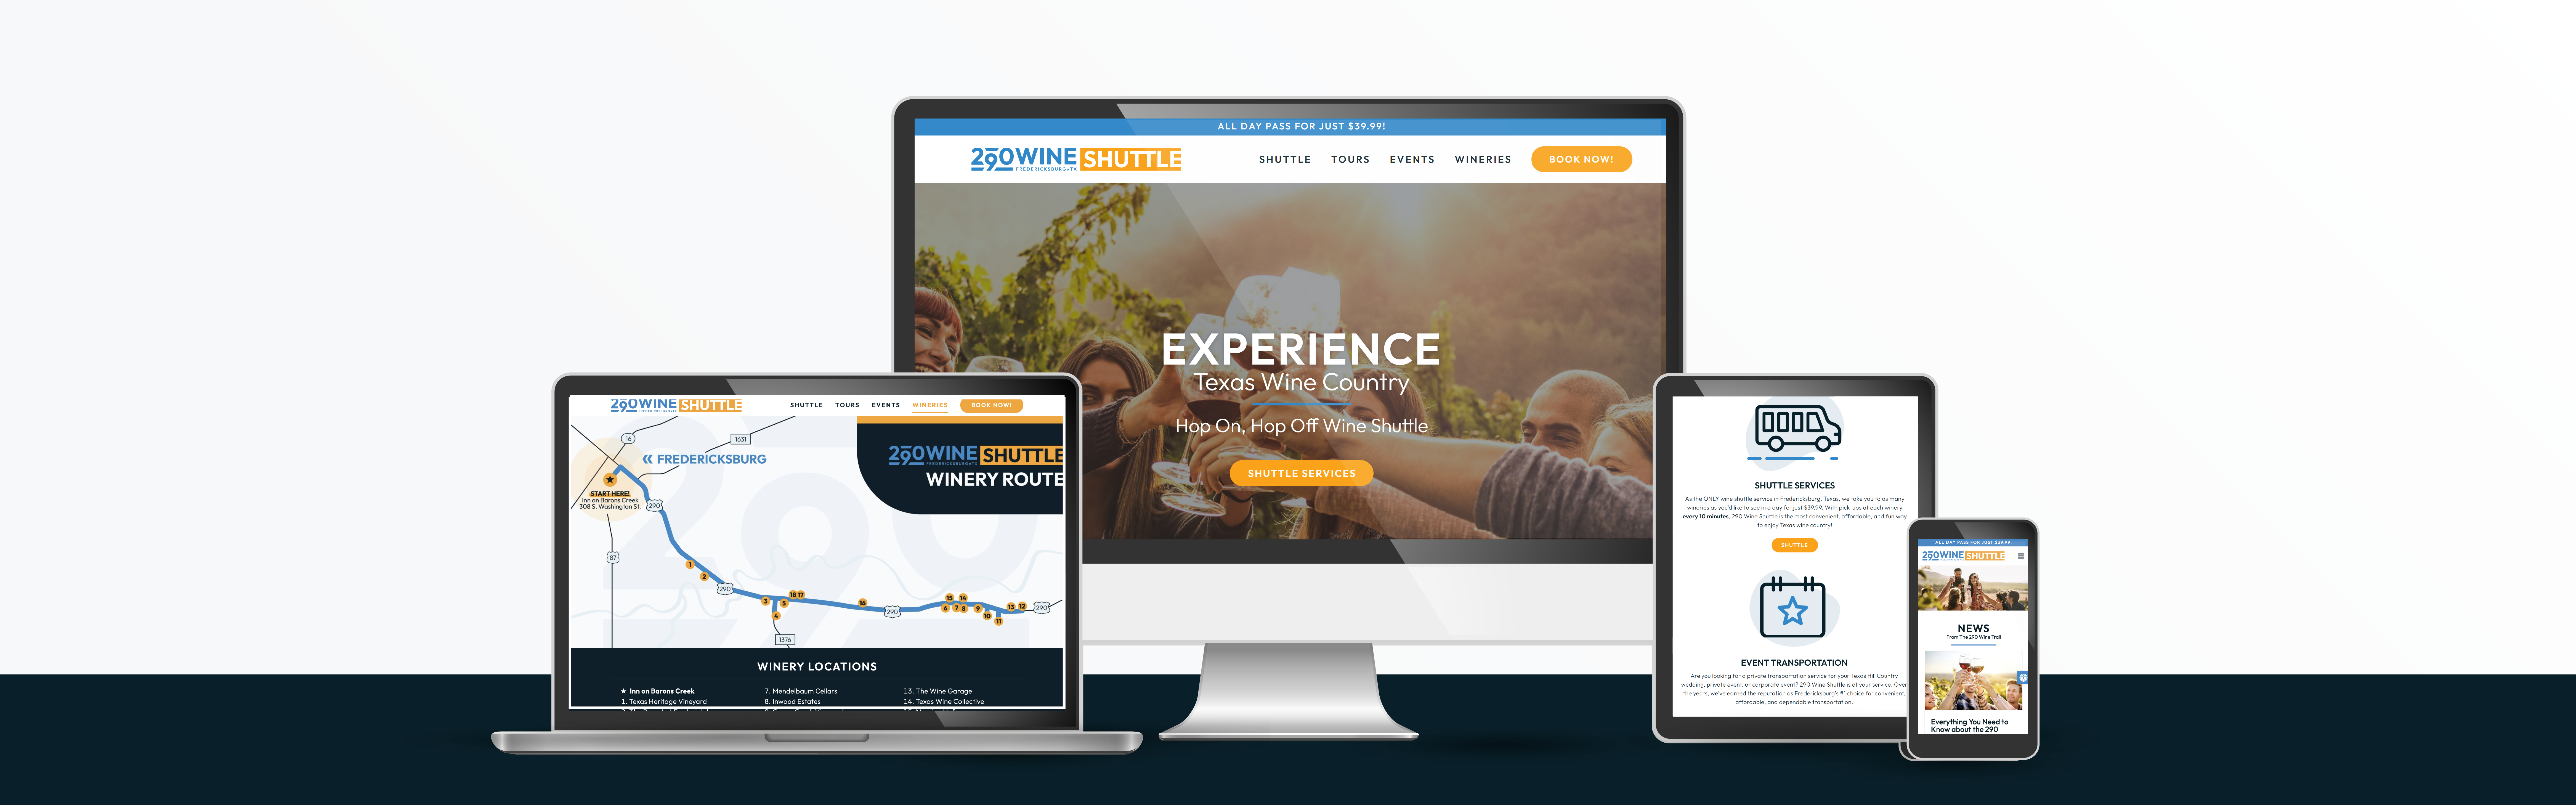 Wine Shuttle website design